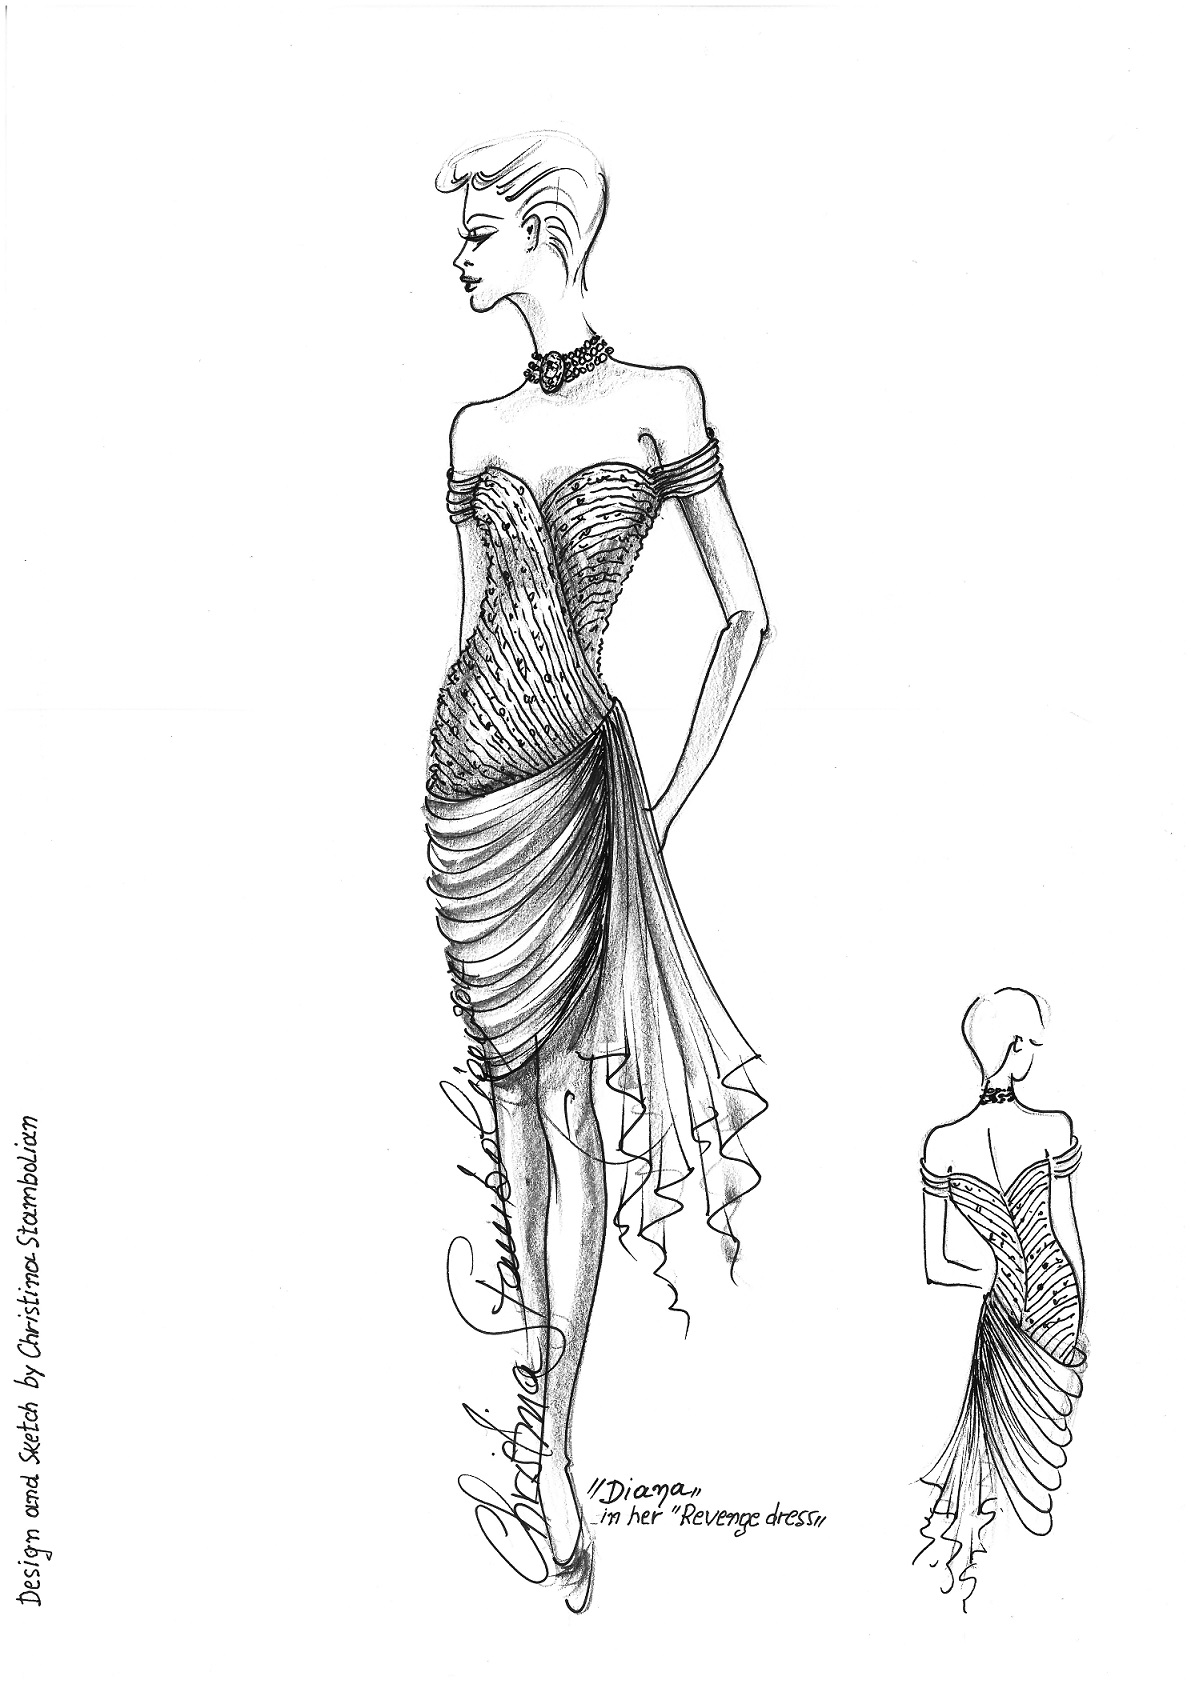 Christina Stambolian's sketch of Princess Diana's dress